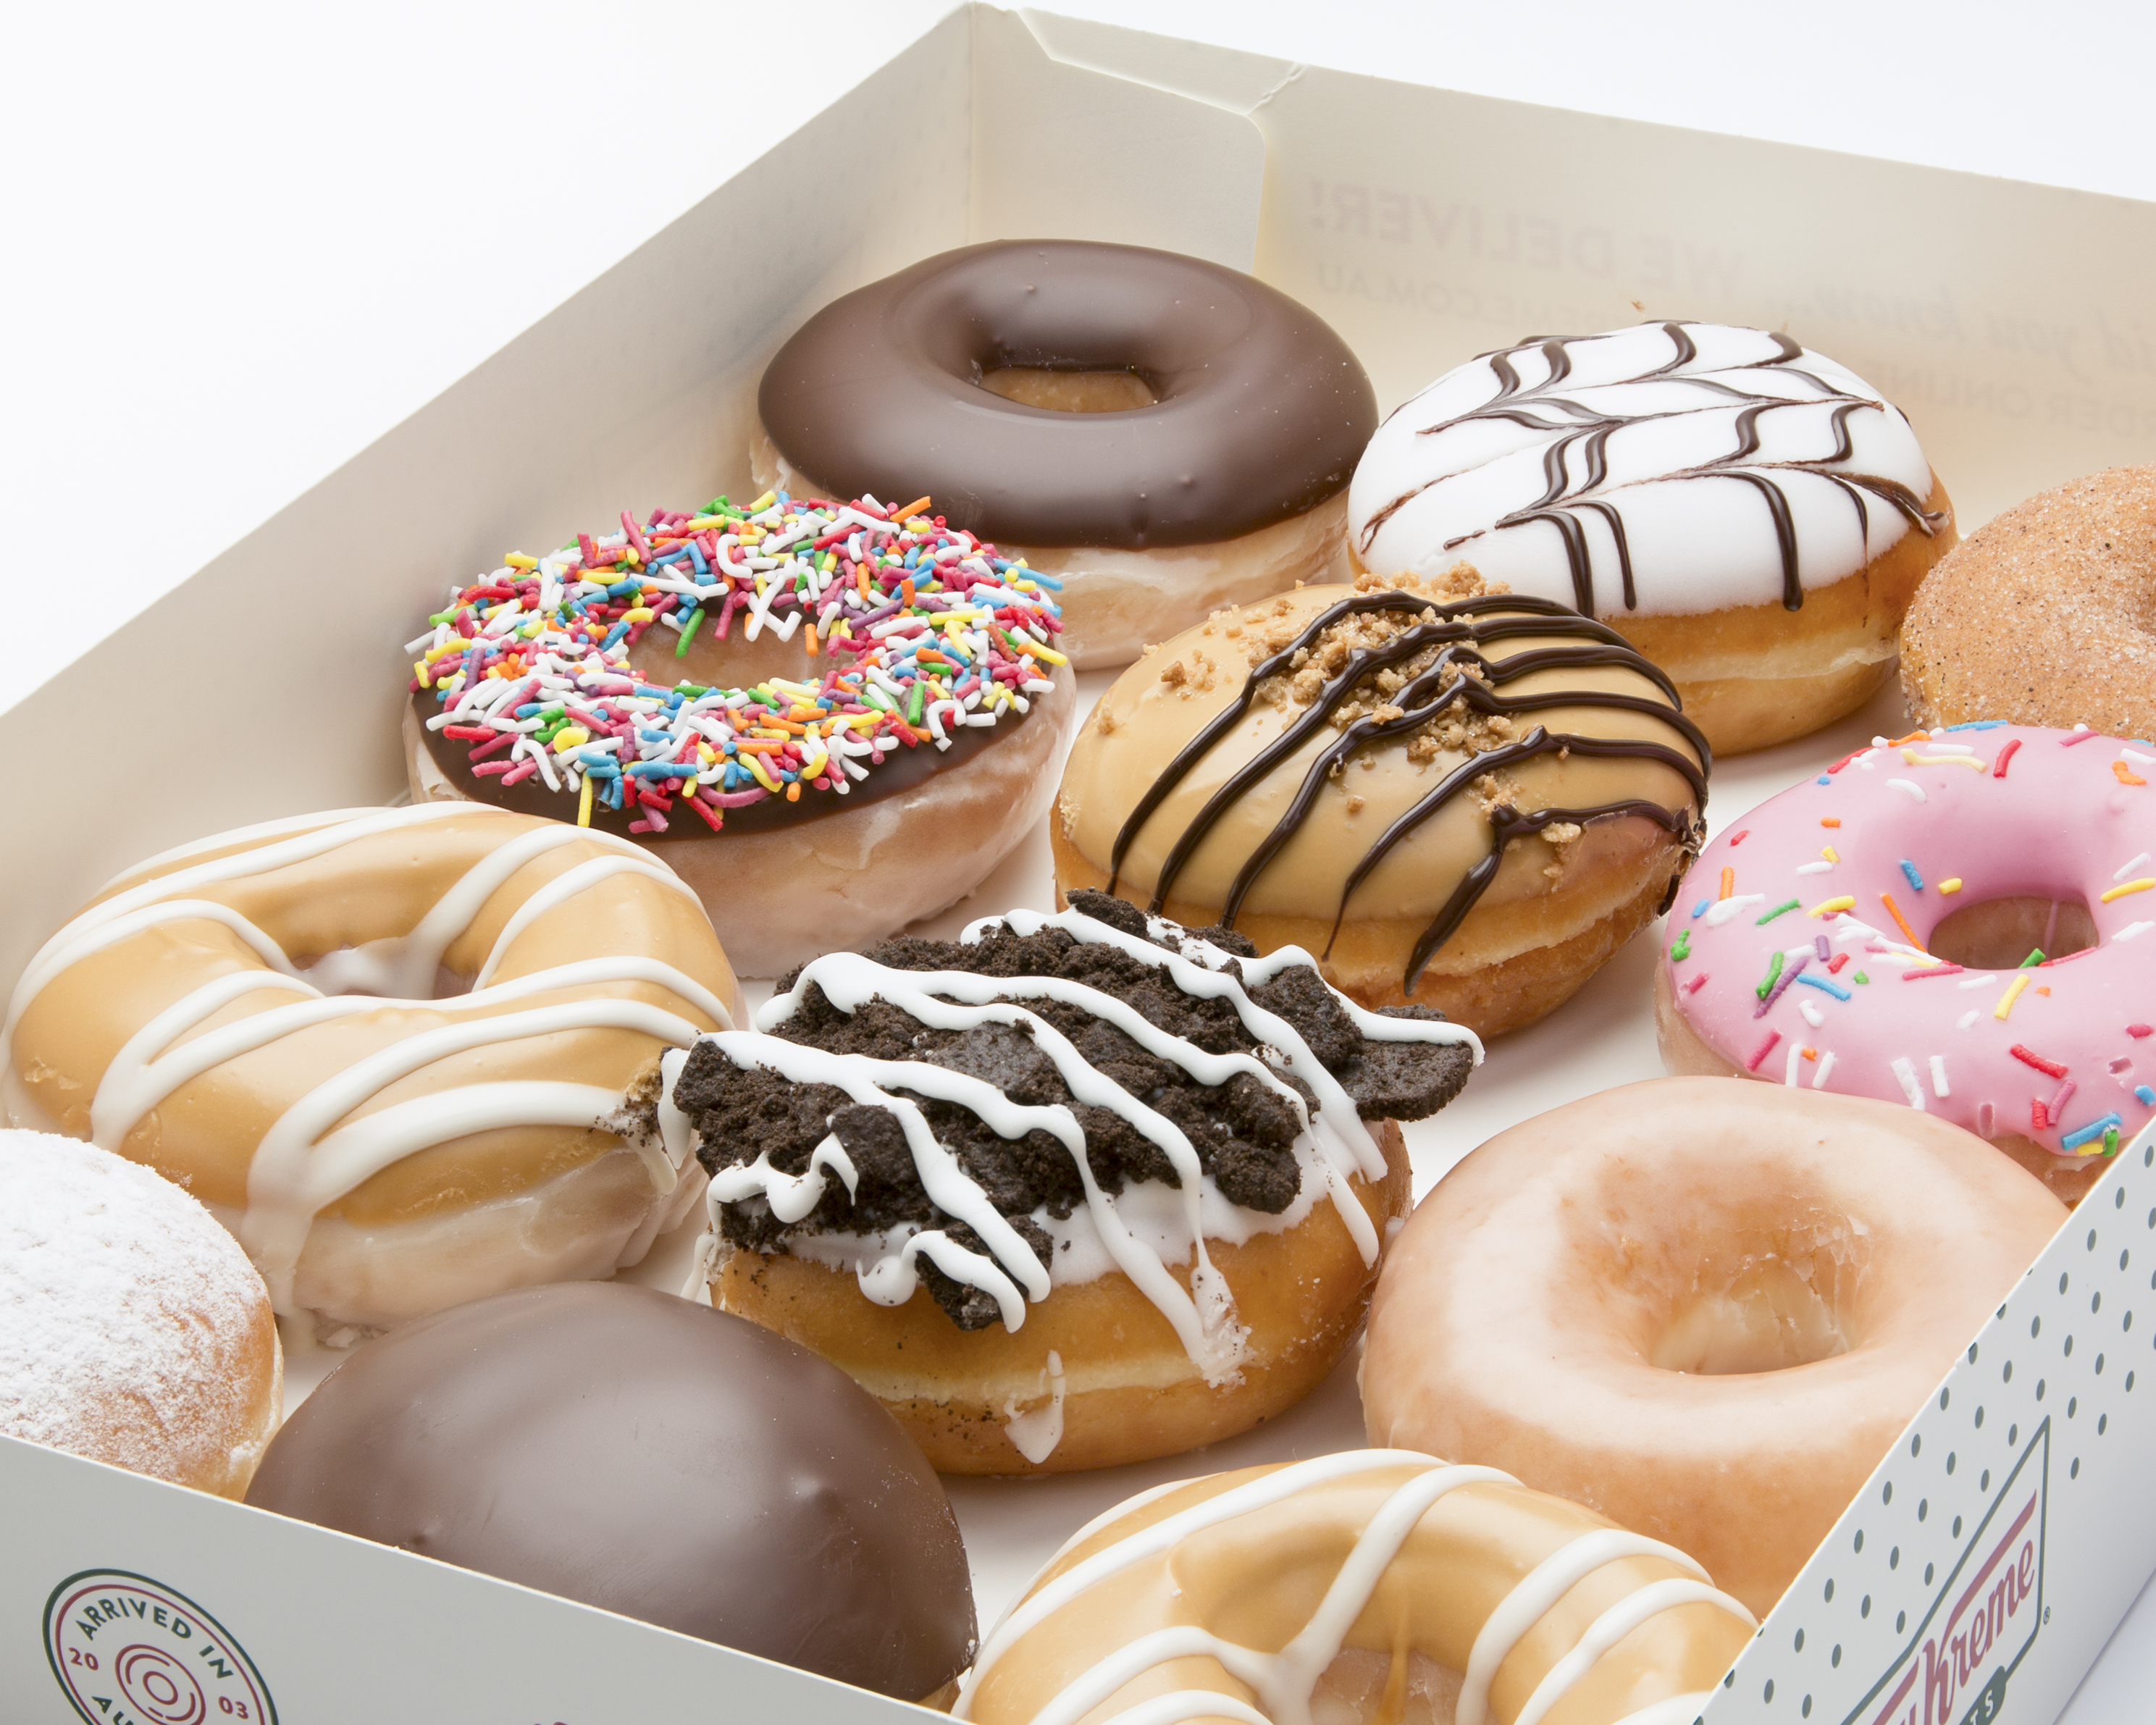 DOUGHNUT TEMPT ME: Krispy Kreme Are Flogging Free Delivery This Week